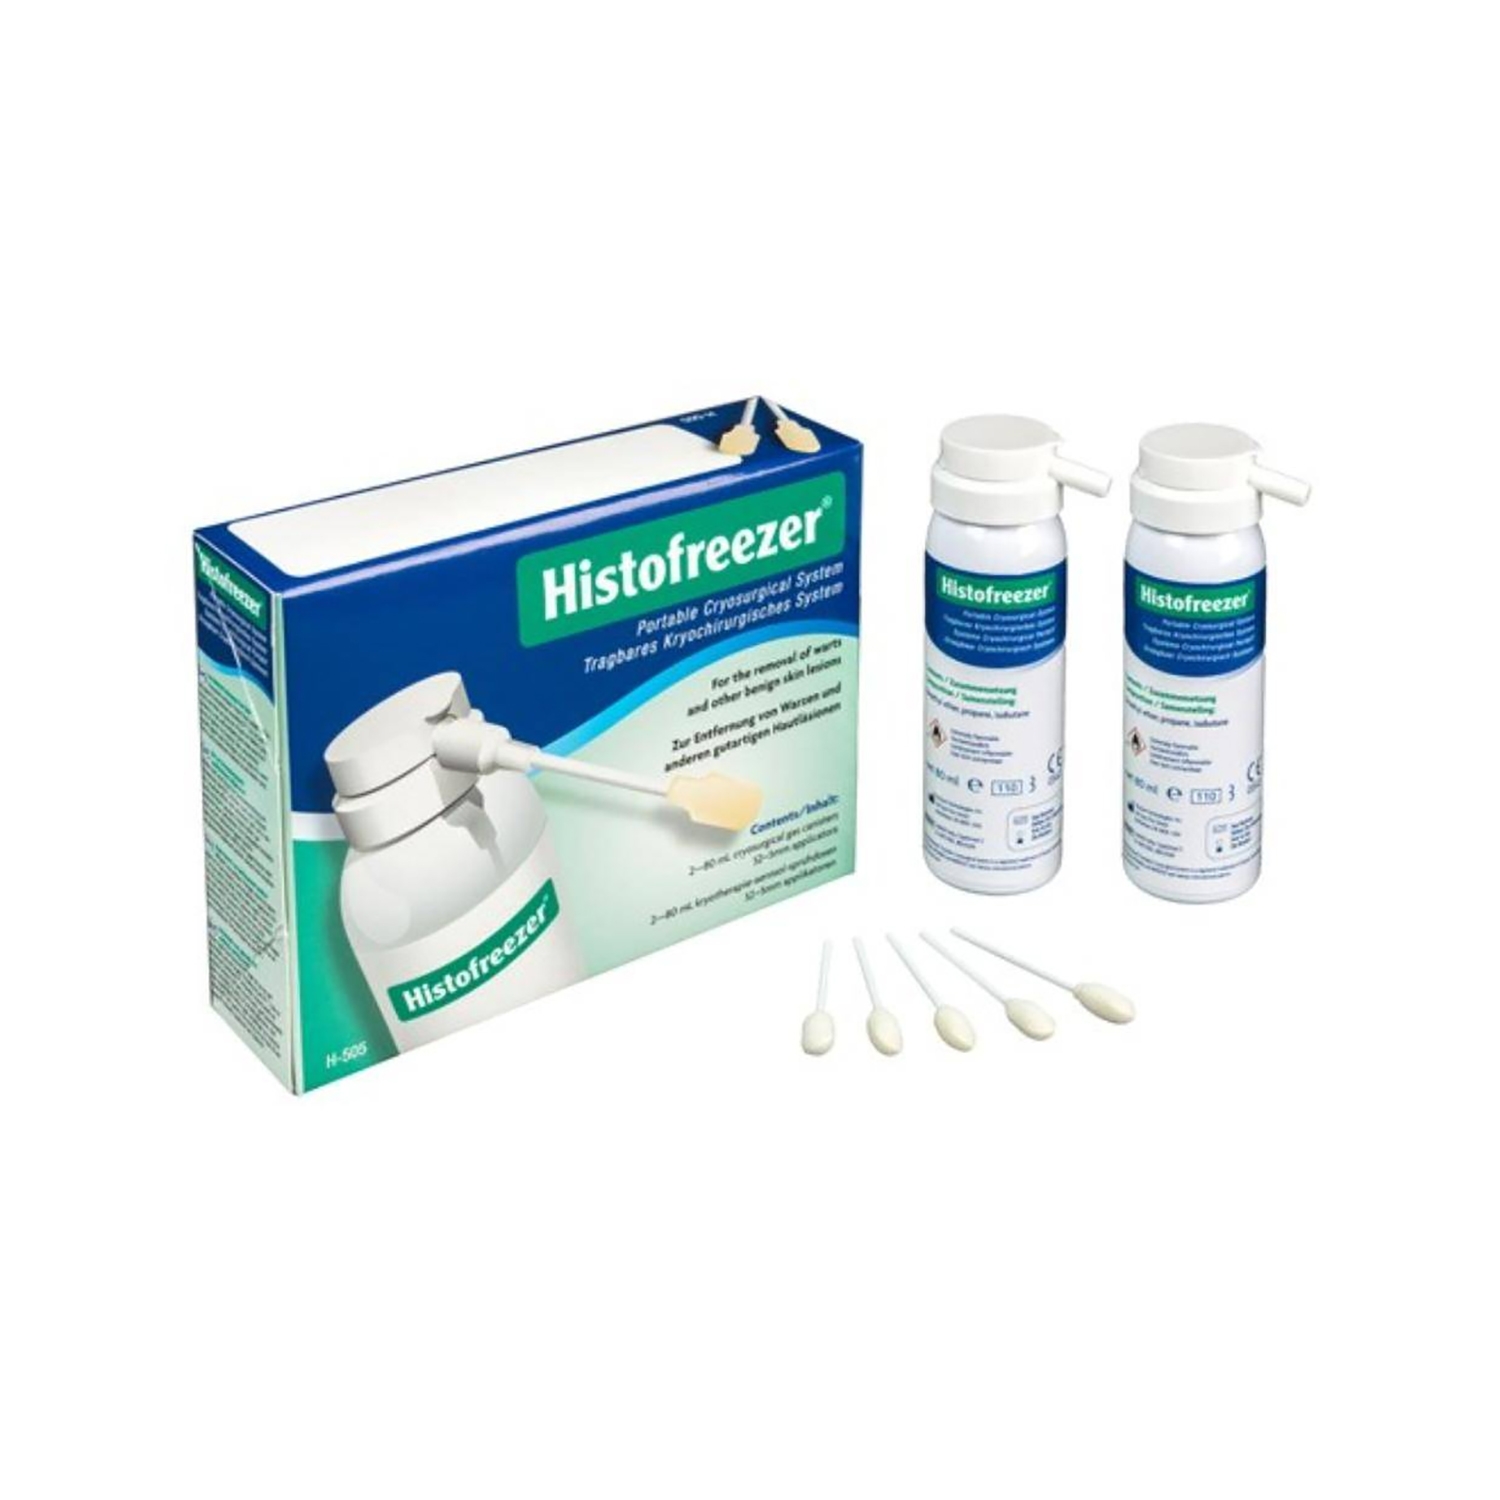 Histofreezer klinion applications (2 x 80 ml)